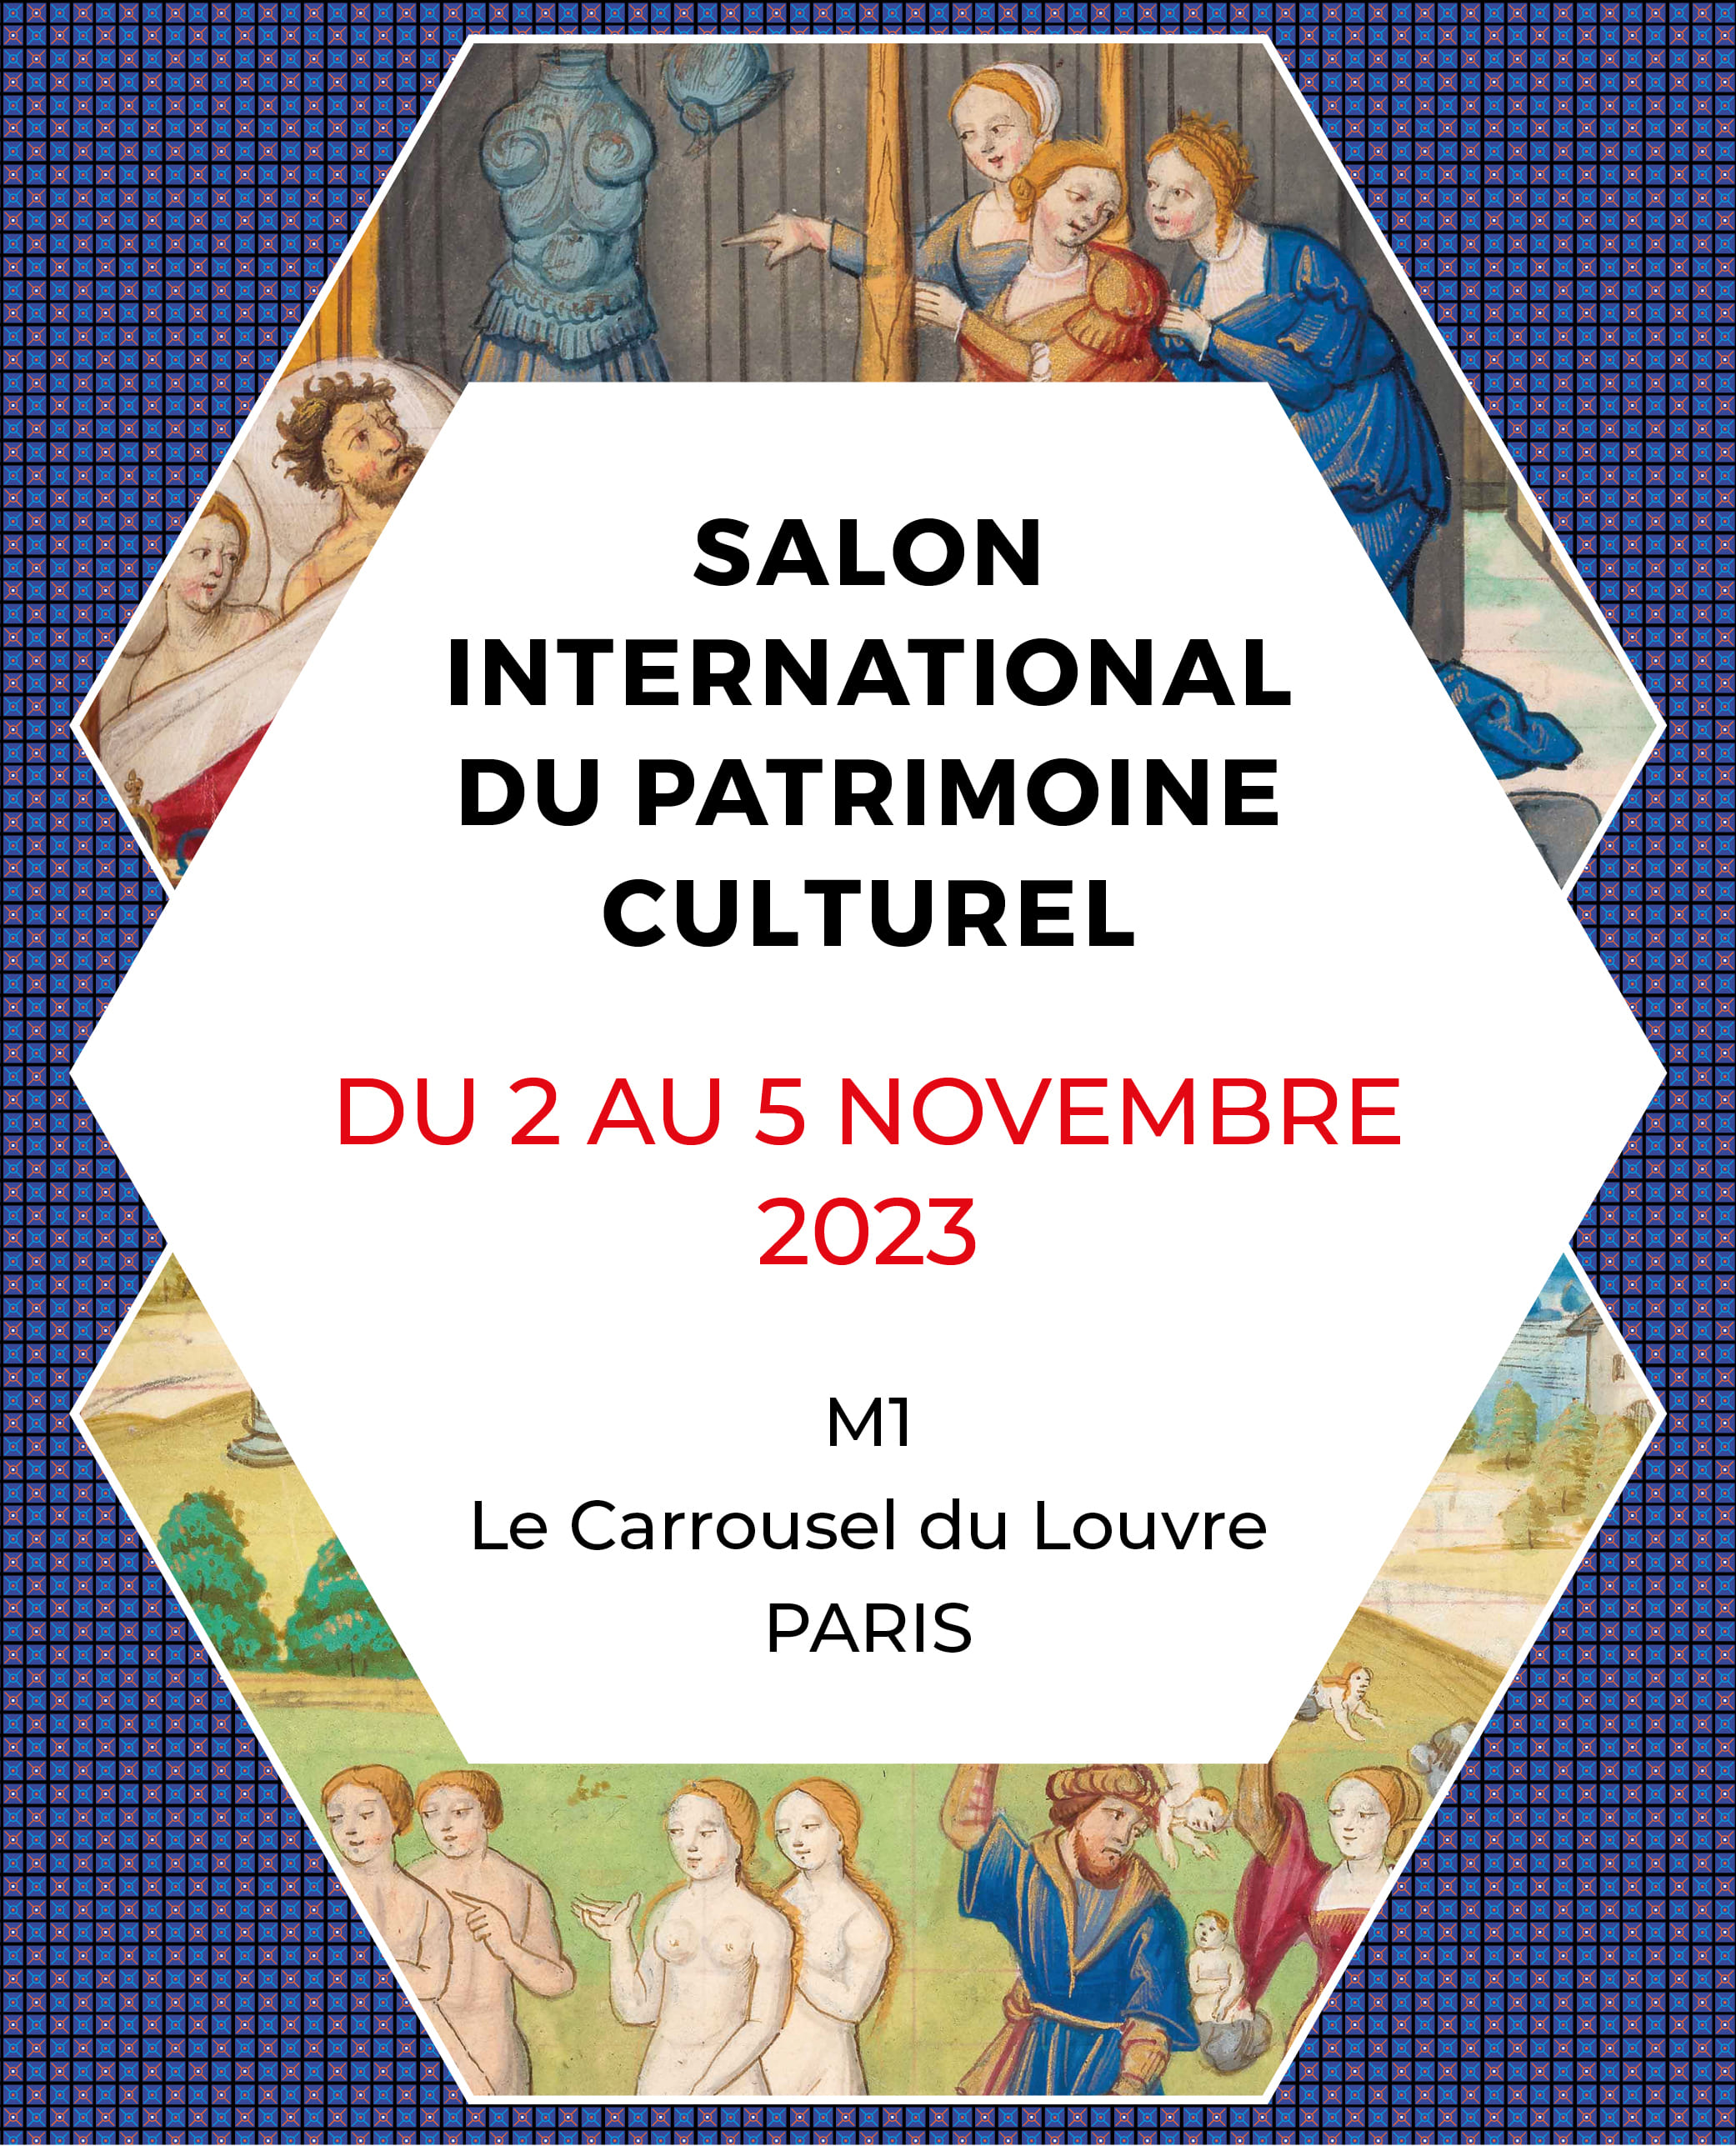 Salon International du Patrimoine Culturel del 2 al 5 de noviembre.